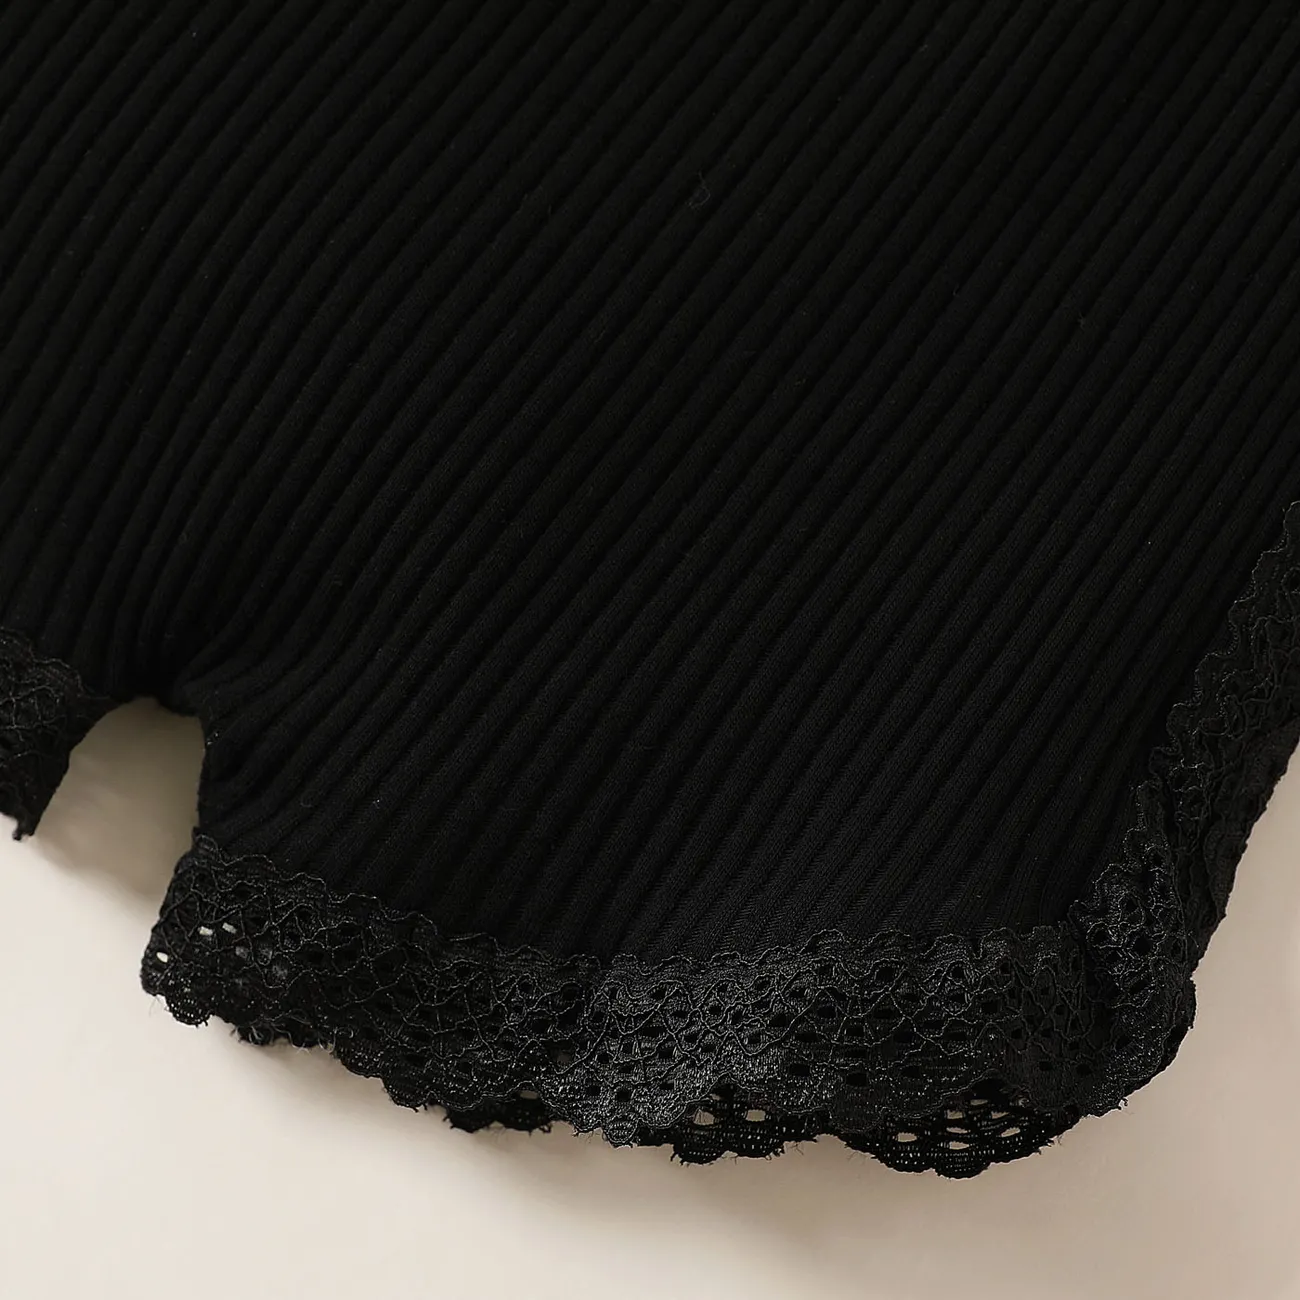 Baby Girl 95% Cotton Ribbed Lace Detail Shorts Black big image 1